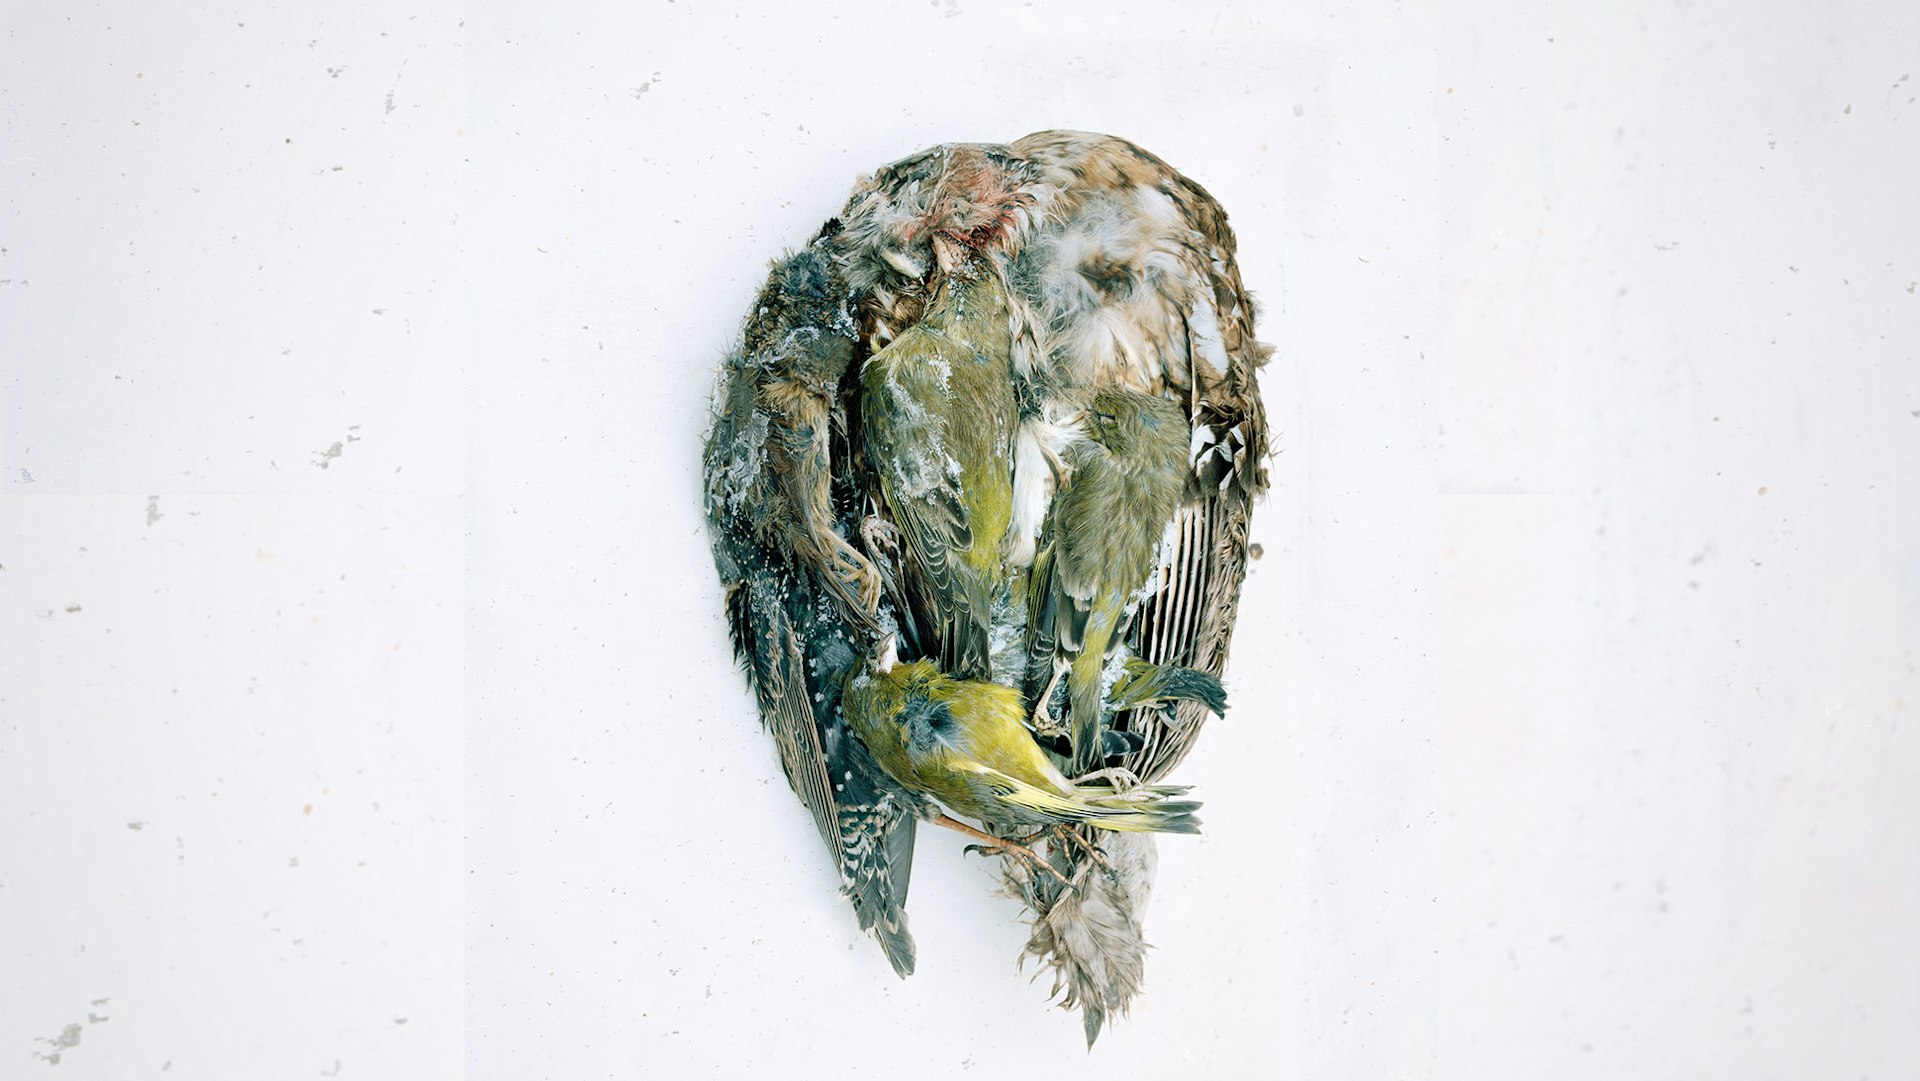 Unidentified bird by Spencer Murphy.